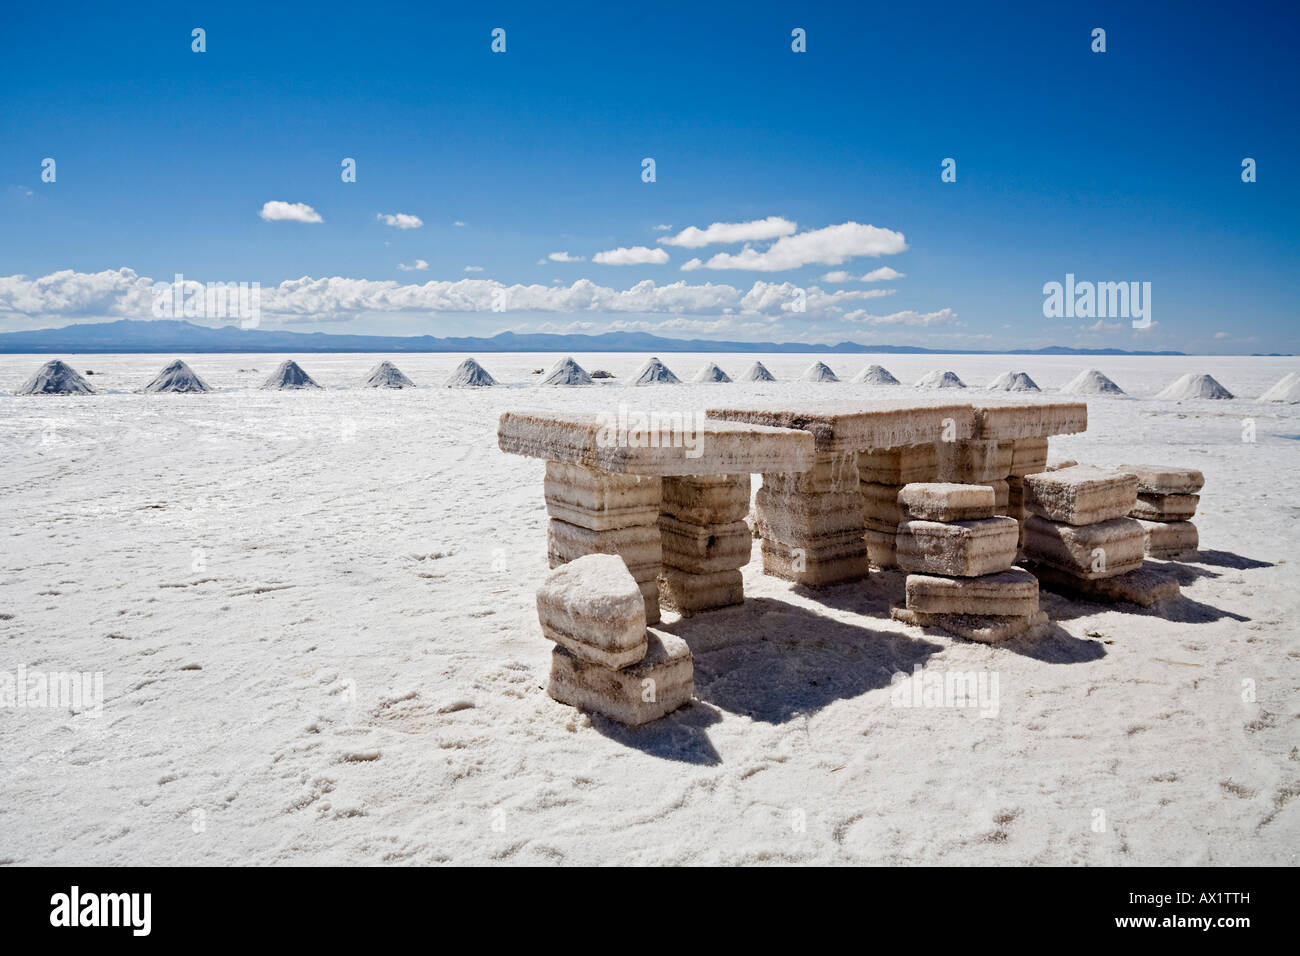 Salt hotel Hotel de Sal Playa Blanca, Altiplano, salt lake Salar de Uyuni, Bolivia, South America Stock Photo